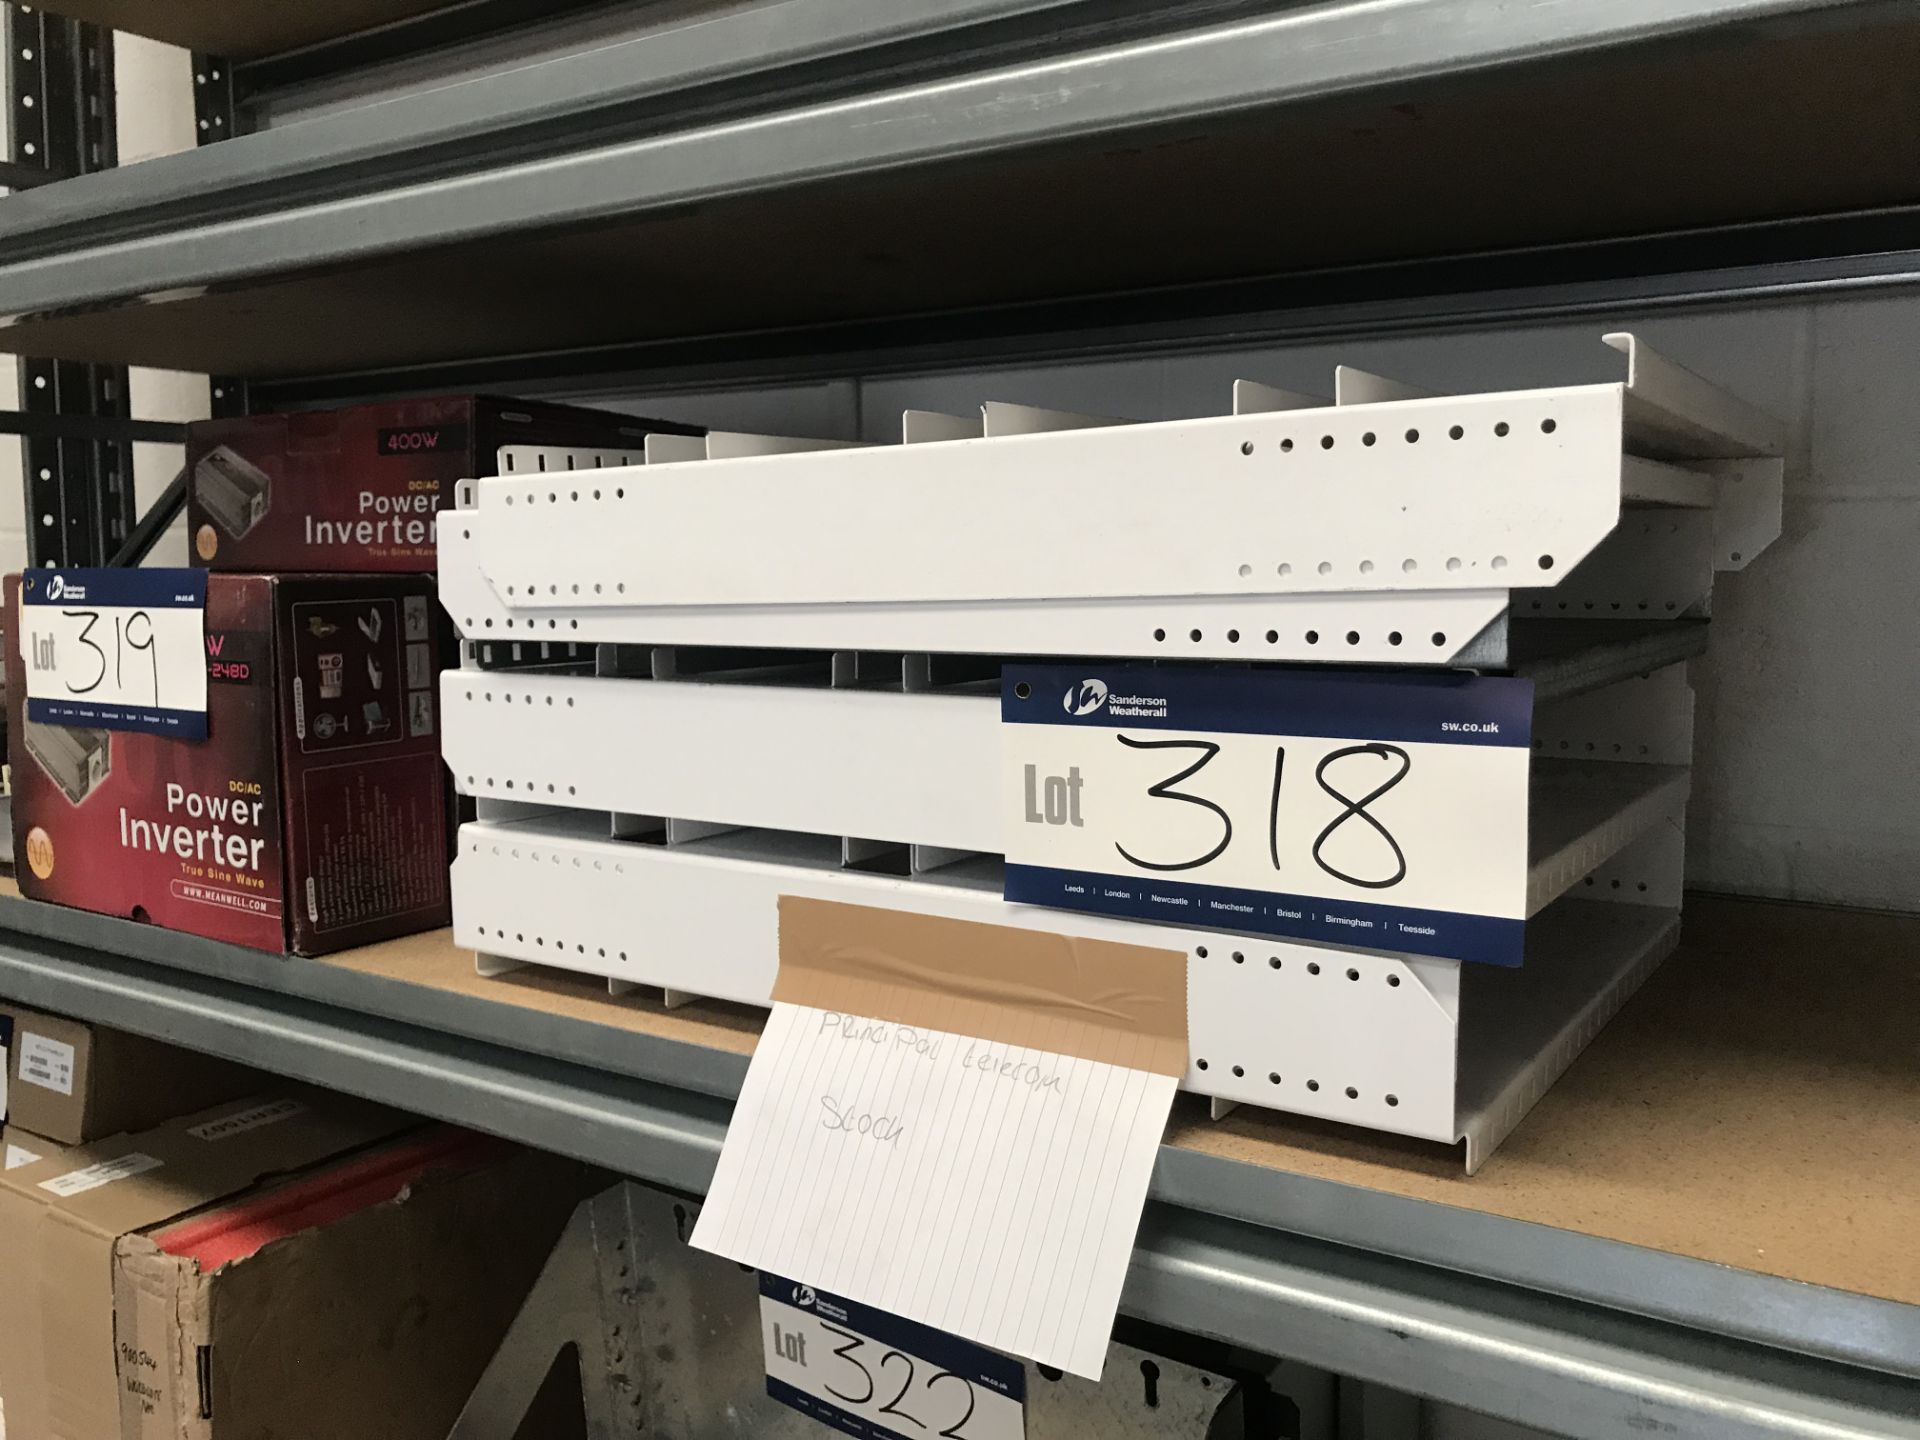 Approx. 7 Rack Shelves